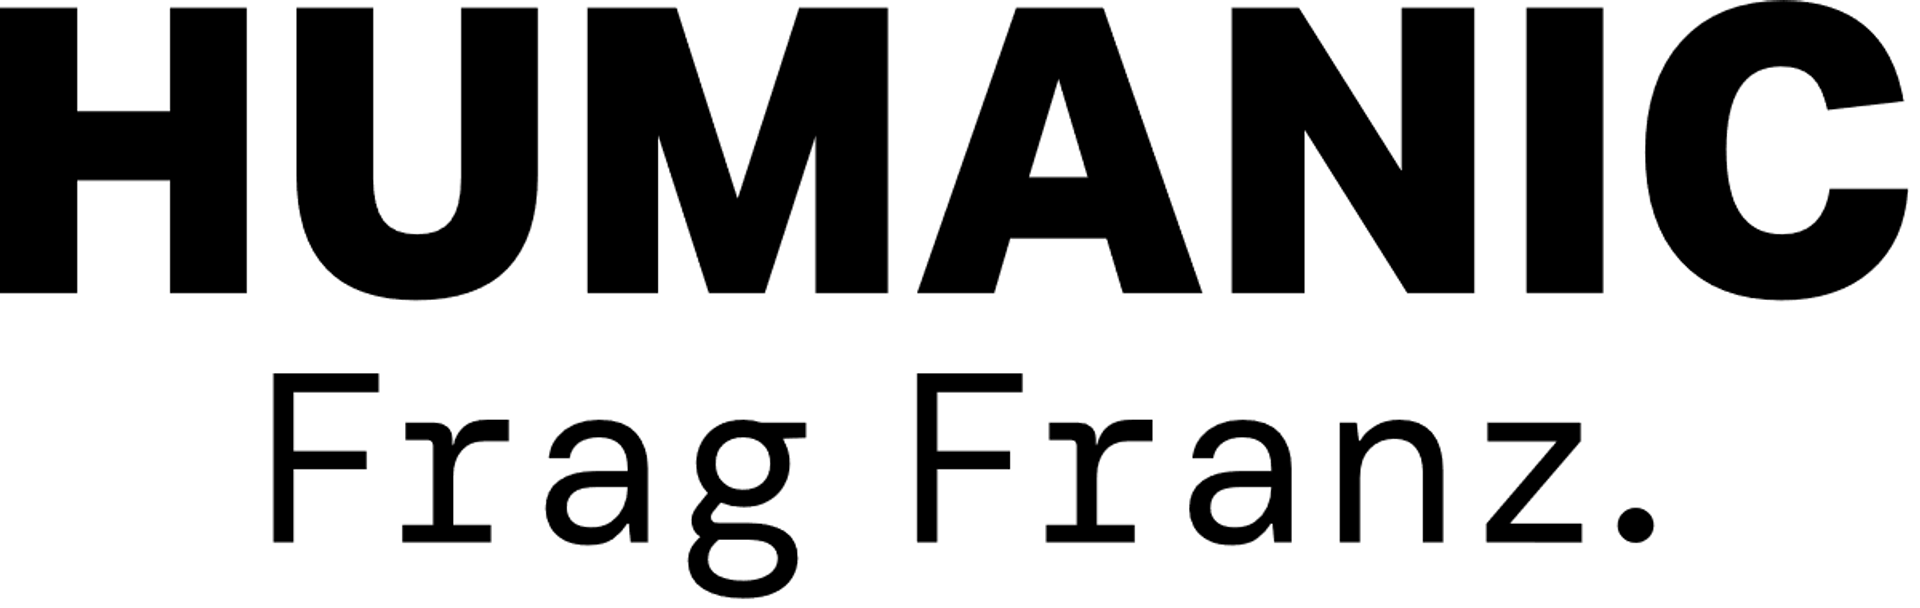 HUMANIC logo die aktuell Flugblatt